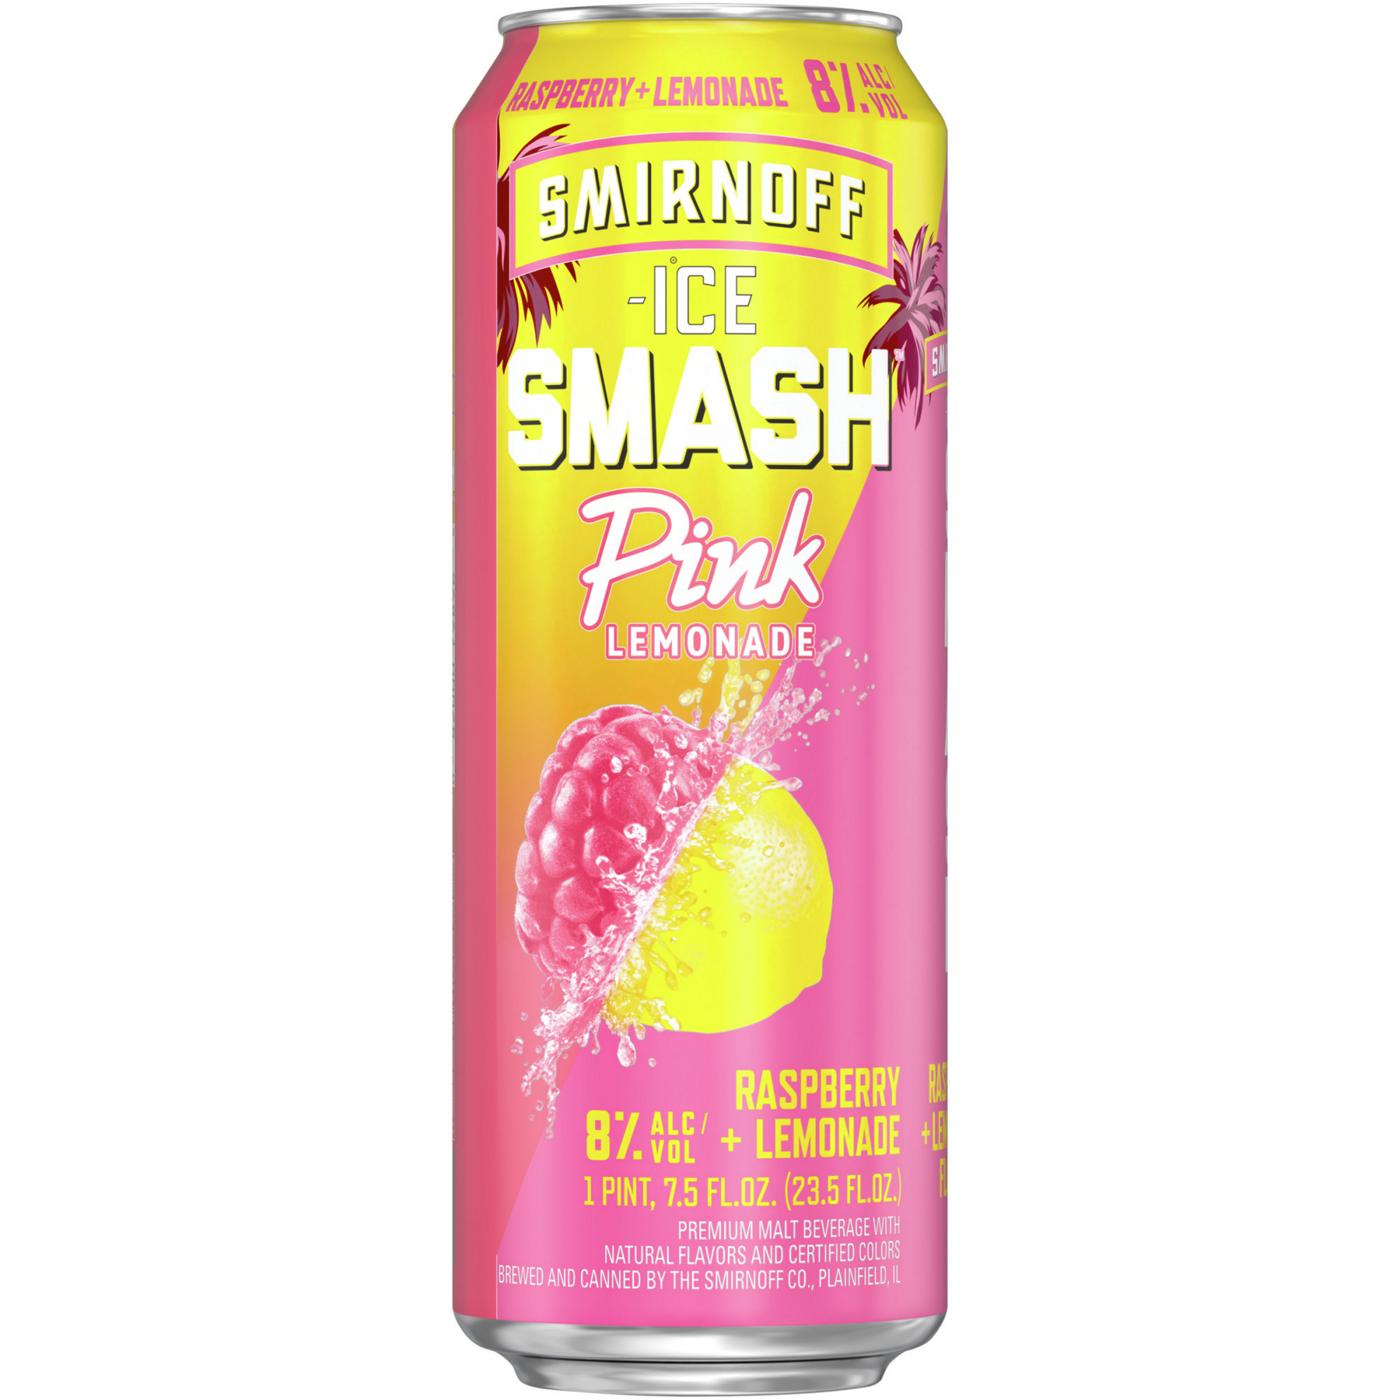 Smirnoff Ice Smash Pink Lemonade; image 1 of 3